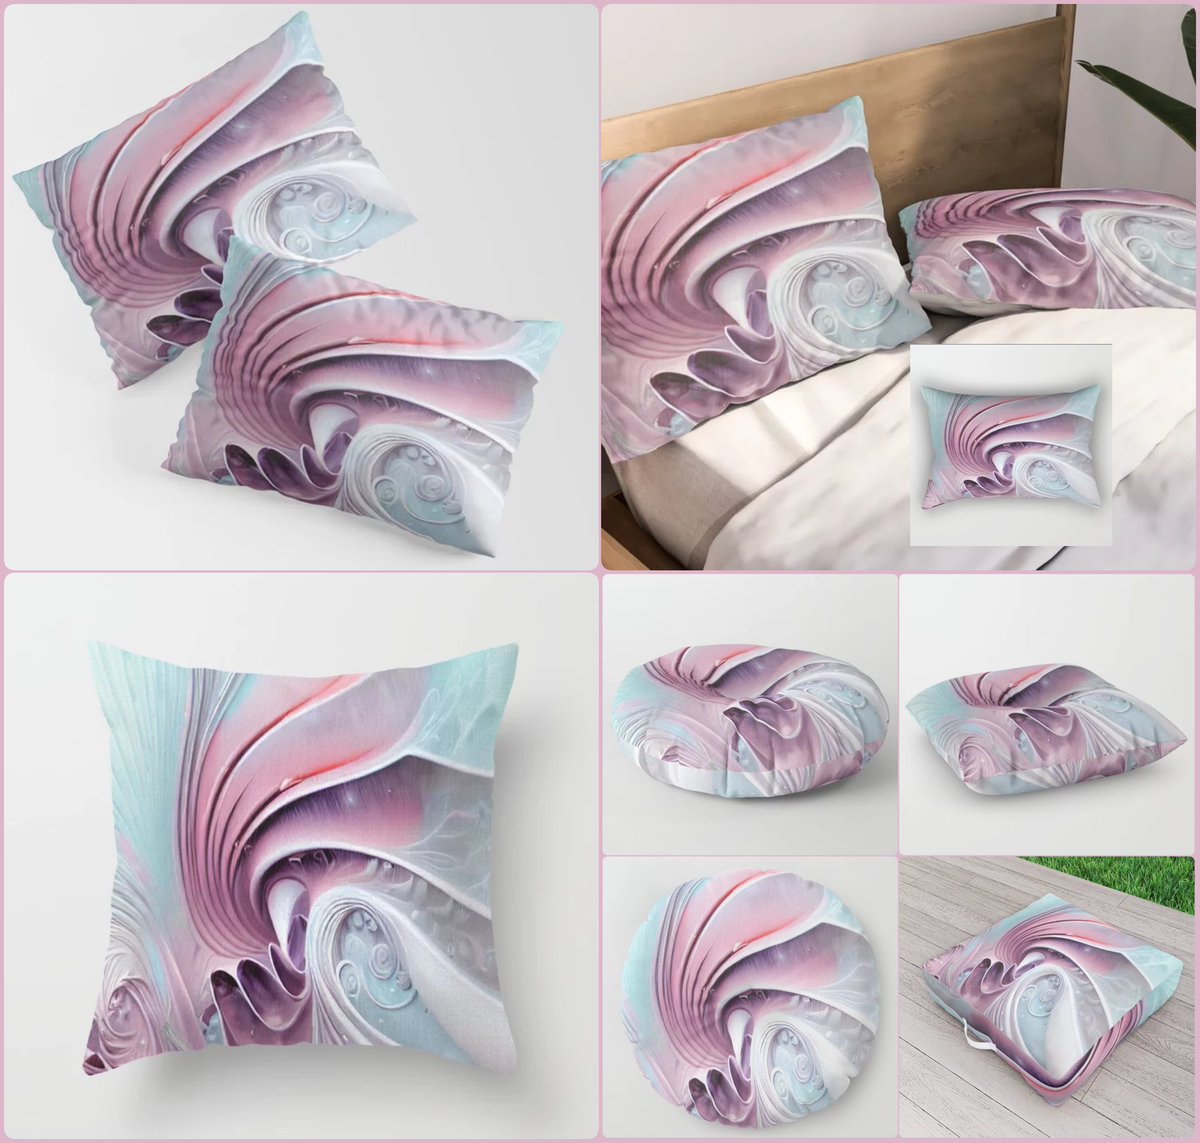 Yolo Quasar Throw Pillow~by Art Falaxy~
~Unique Pillows!~
#artfalaxy #art #bedroom #pillows #homedecor #society6 #Society6max #swirls #modern #trendy #accessories #accents #floorpillows #pillows #shams #blankets

society6.com/product/yolo-q…
COLLECTION: society6.com/art/yolo-quasa…